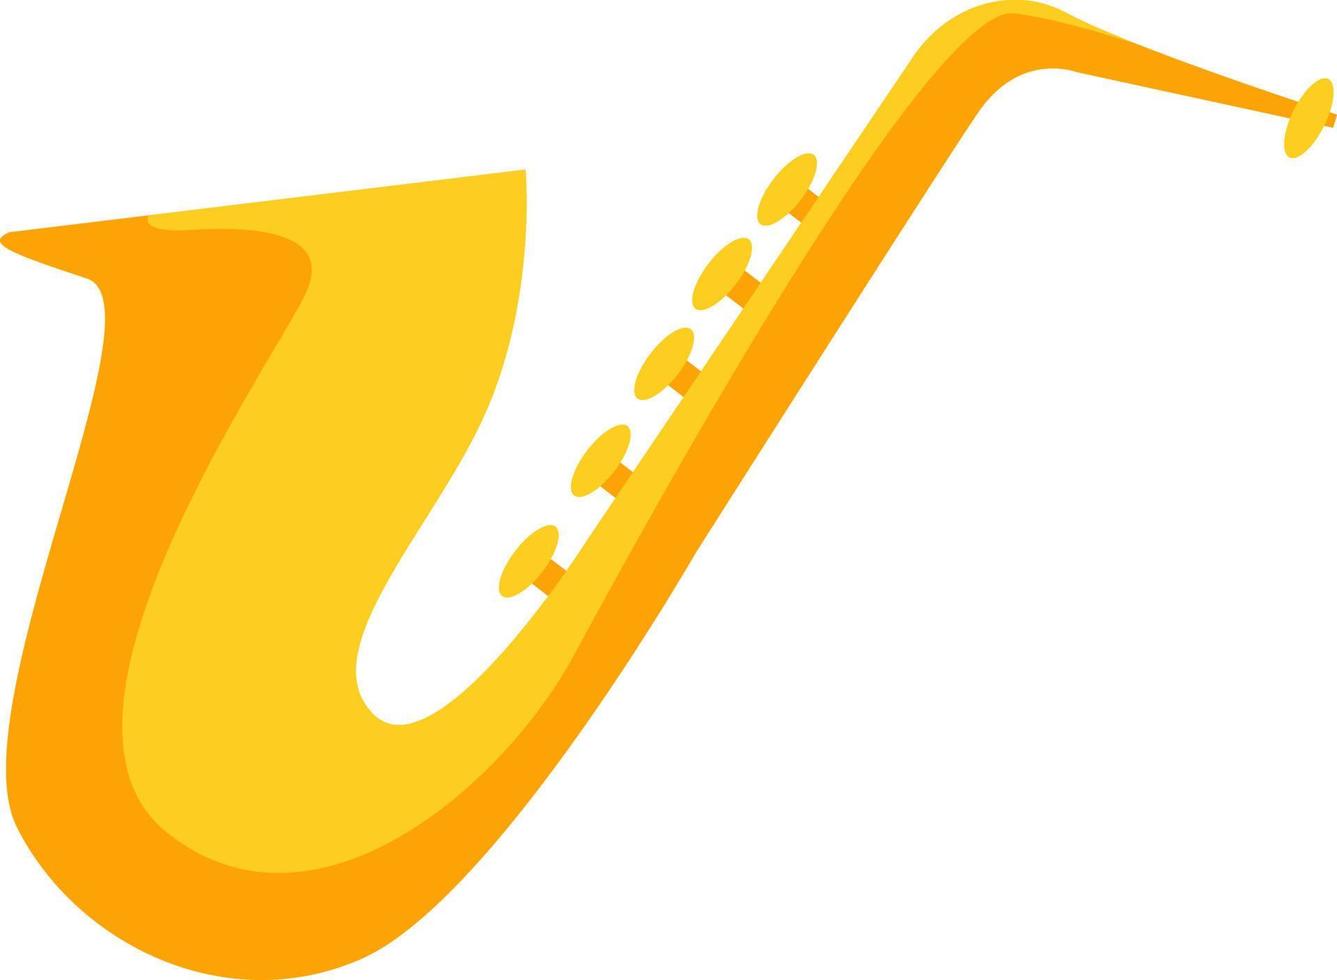 Saxophone instrument, illustration, vector on white background.